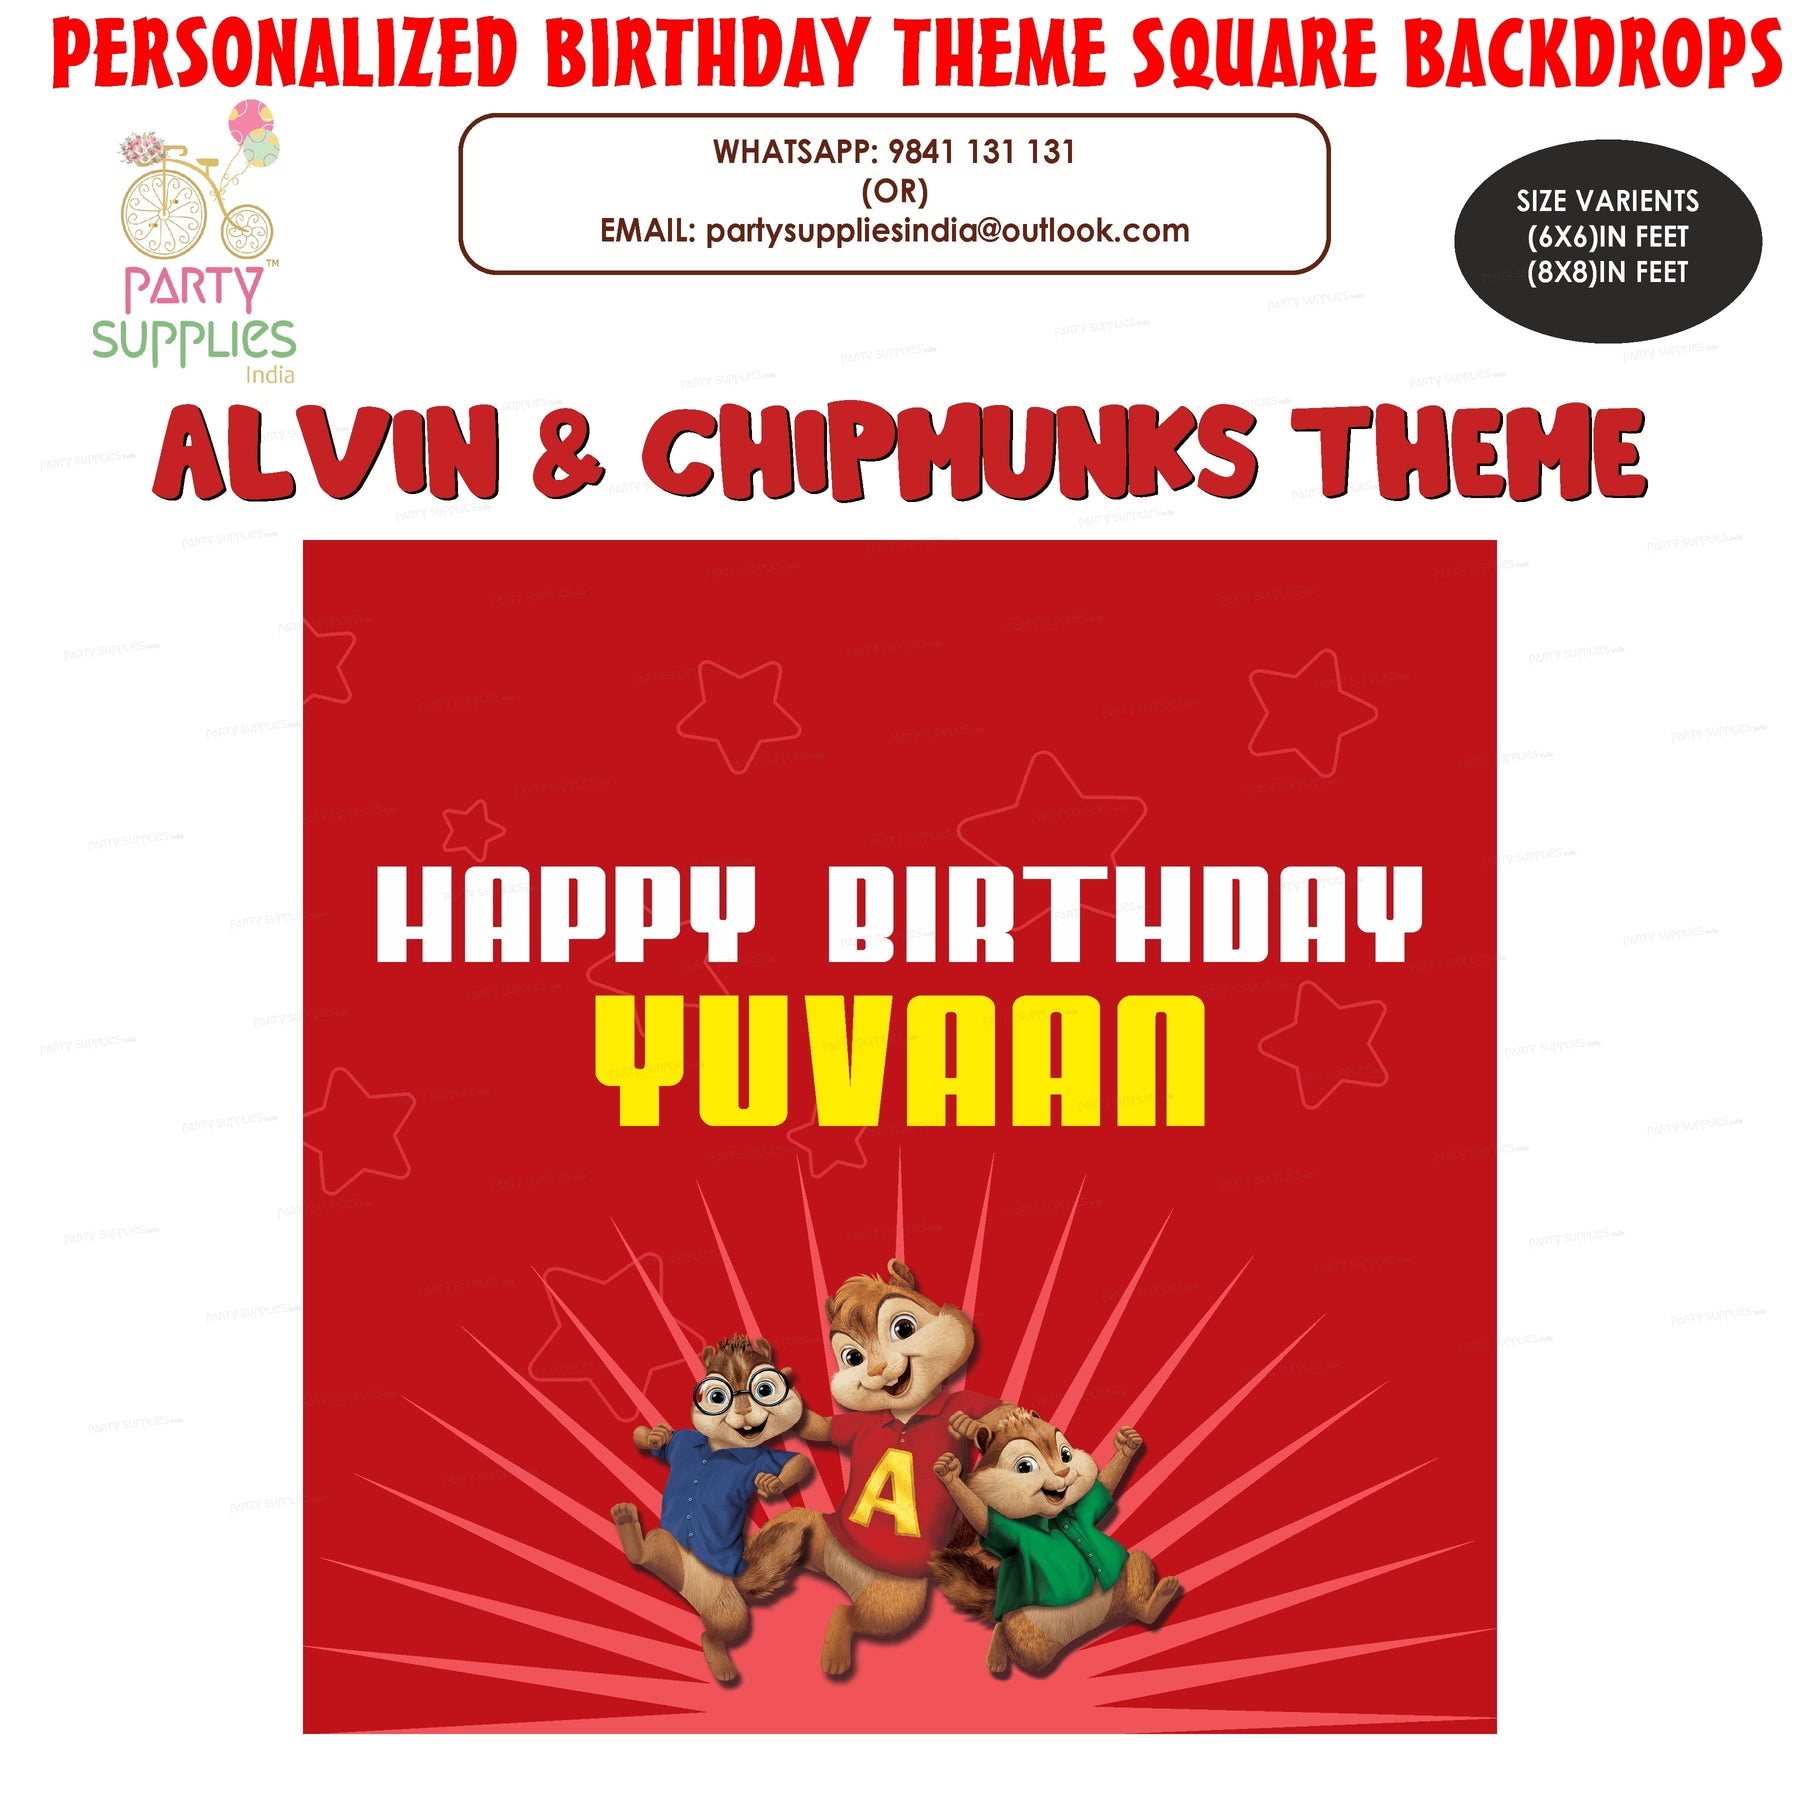 PSI Alvin and Chipmunks Theme Premium Square Backdrop